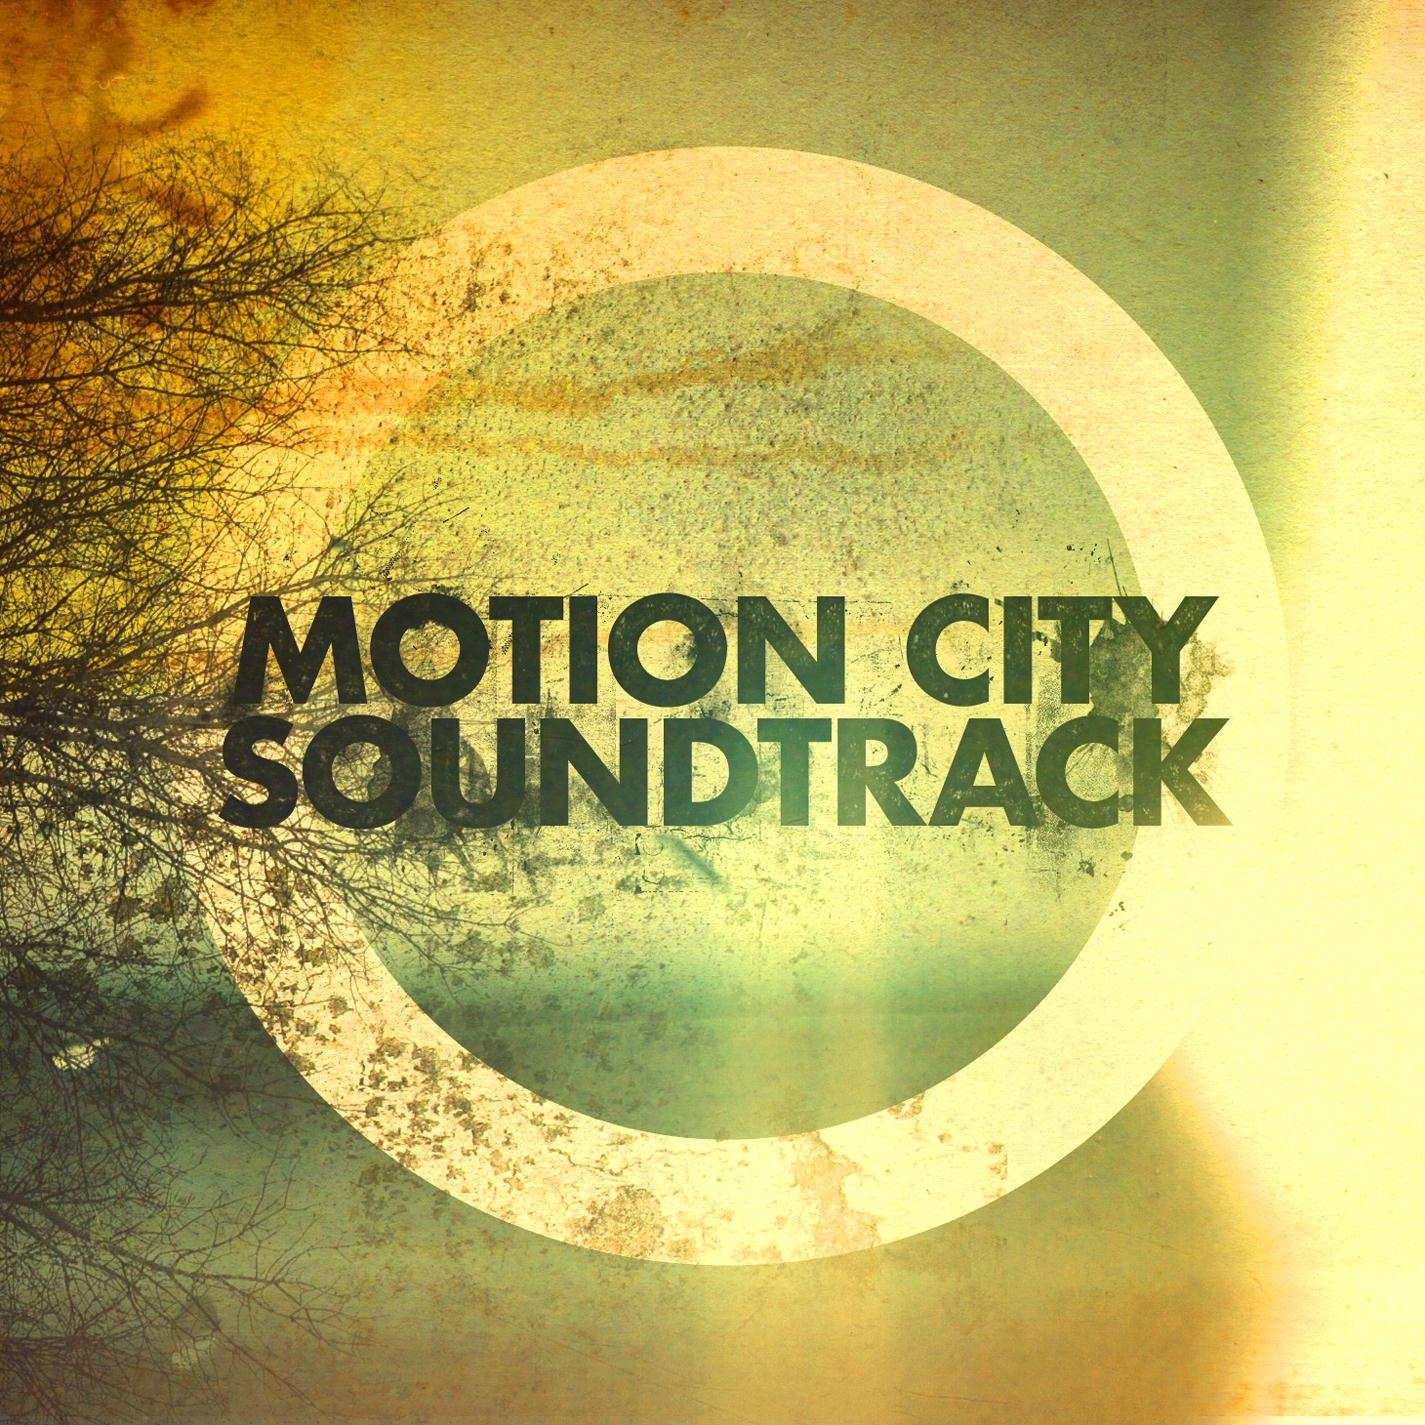 motion-city-soundtrack-go-cover.jpg